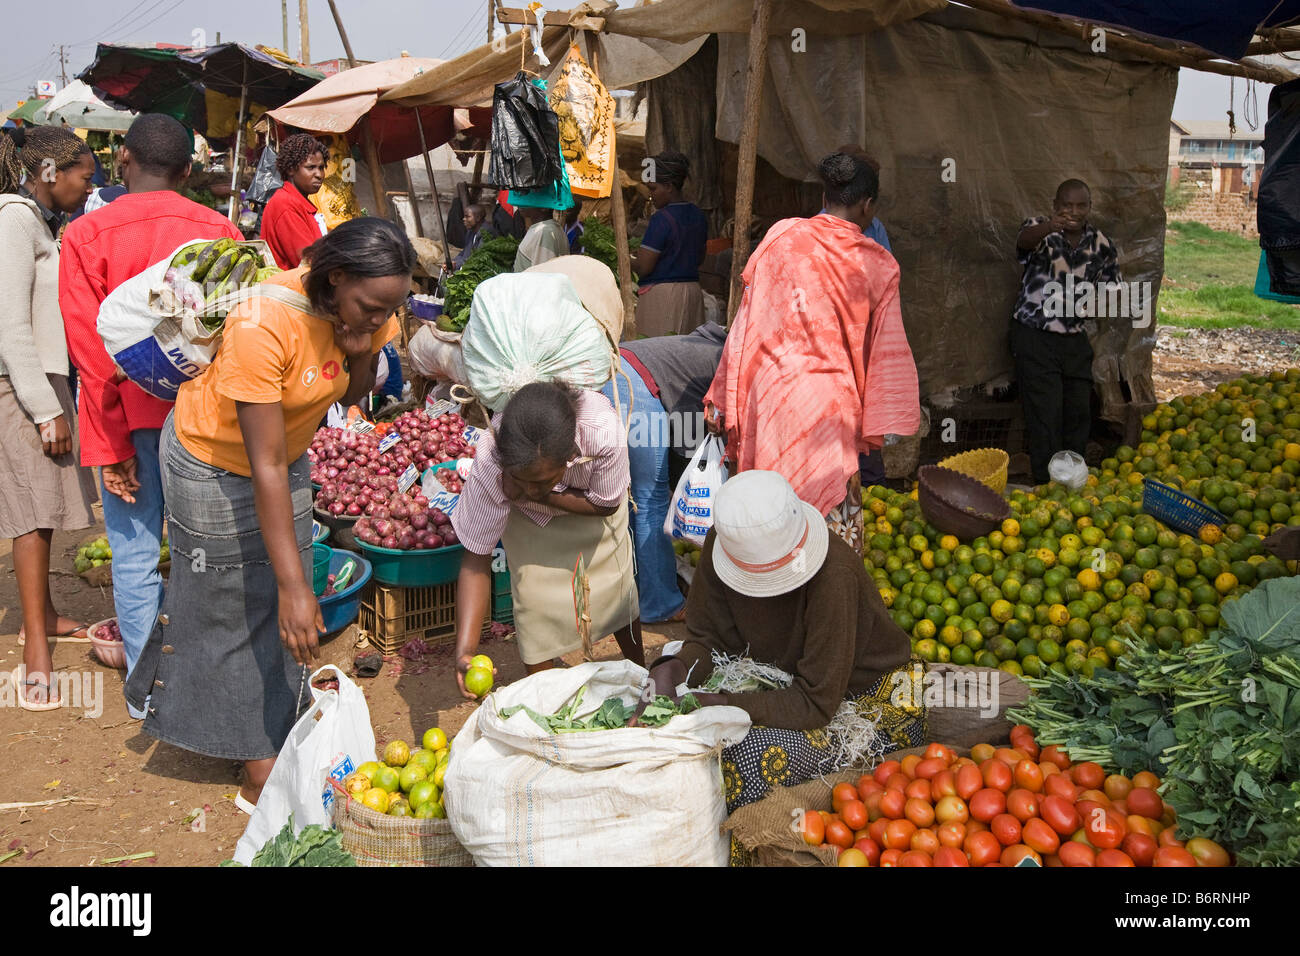 City Market Nairobi Kenya Africa Stock Photo